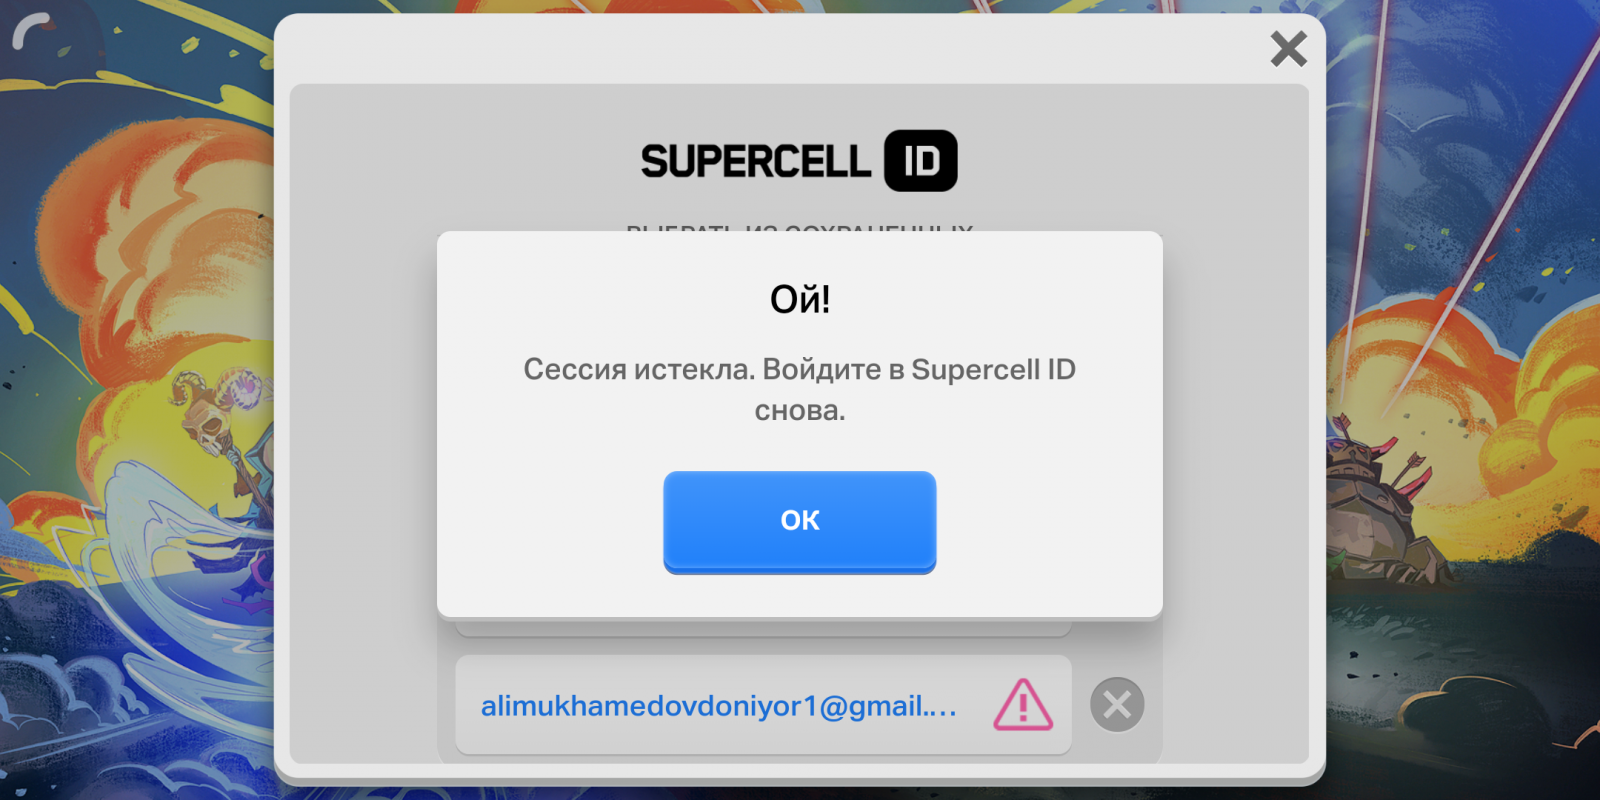 Код подтверждения суперселл. Сессия истекла войдите в Supercell ID. Supercell ID код. Пароль суперселл айди. Сессия истекла войдите снова Supercell.